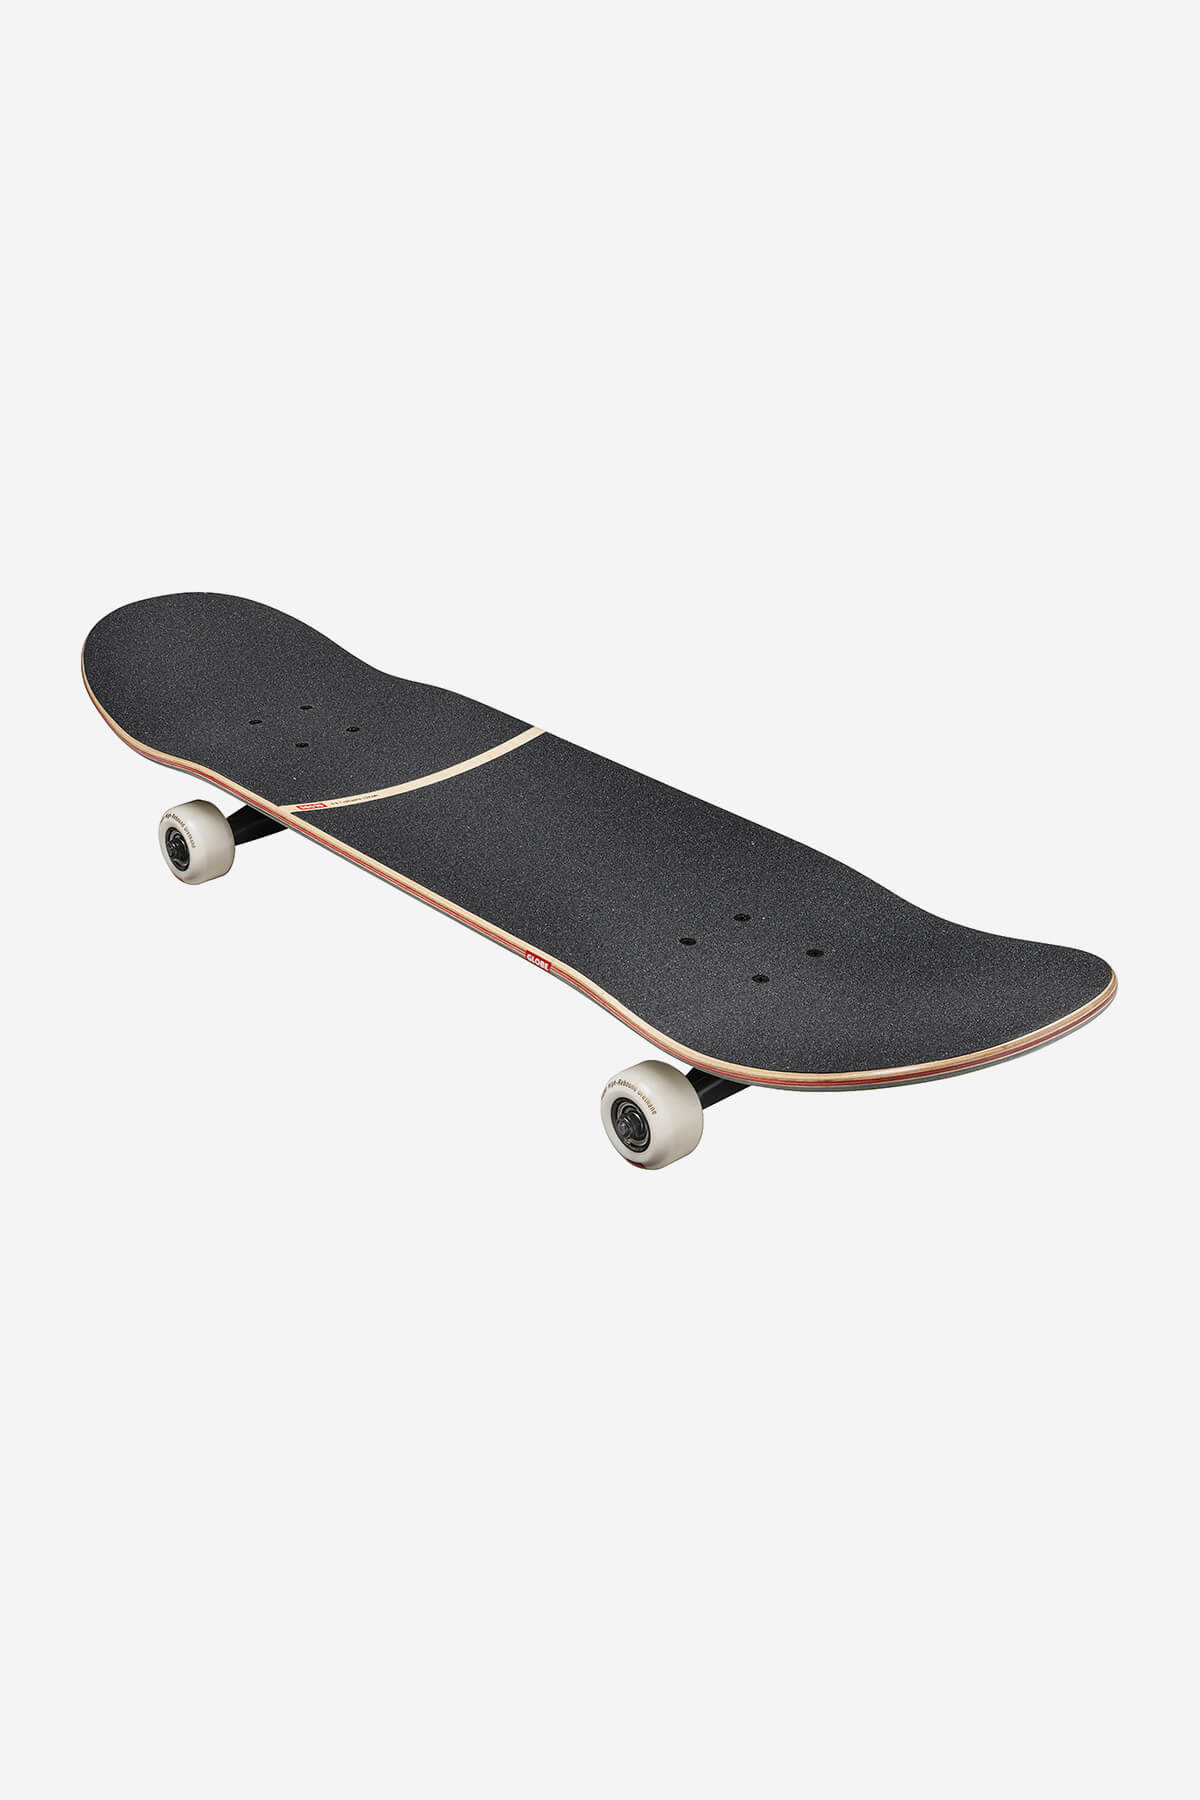 Globe Skateboard completa G3 Bar 8,0" Completa Skateboard in Impact/Olive